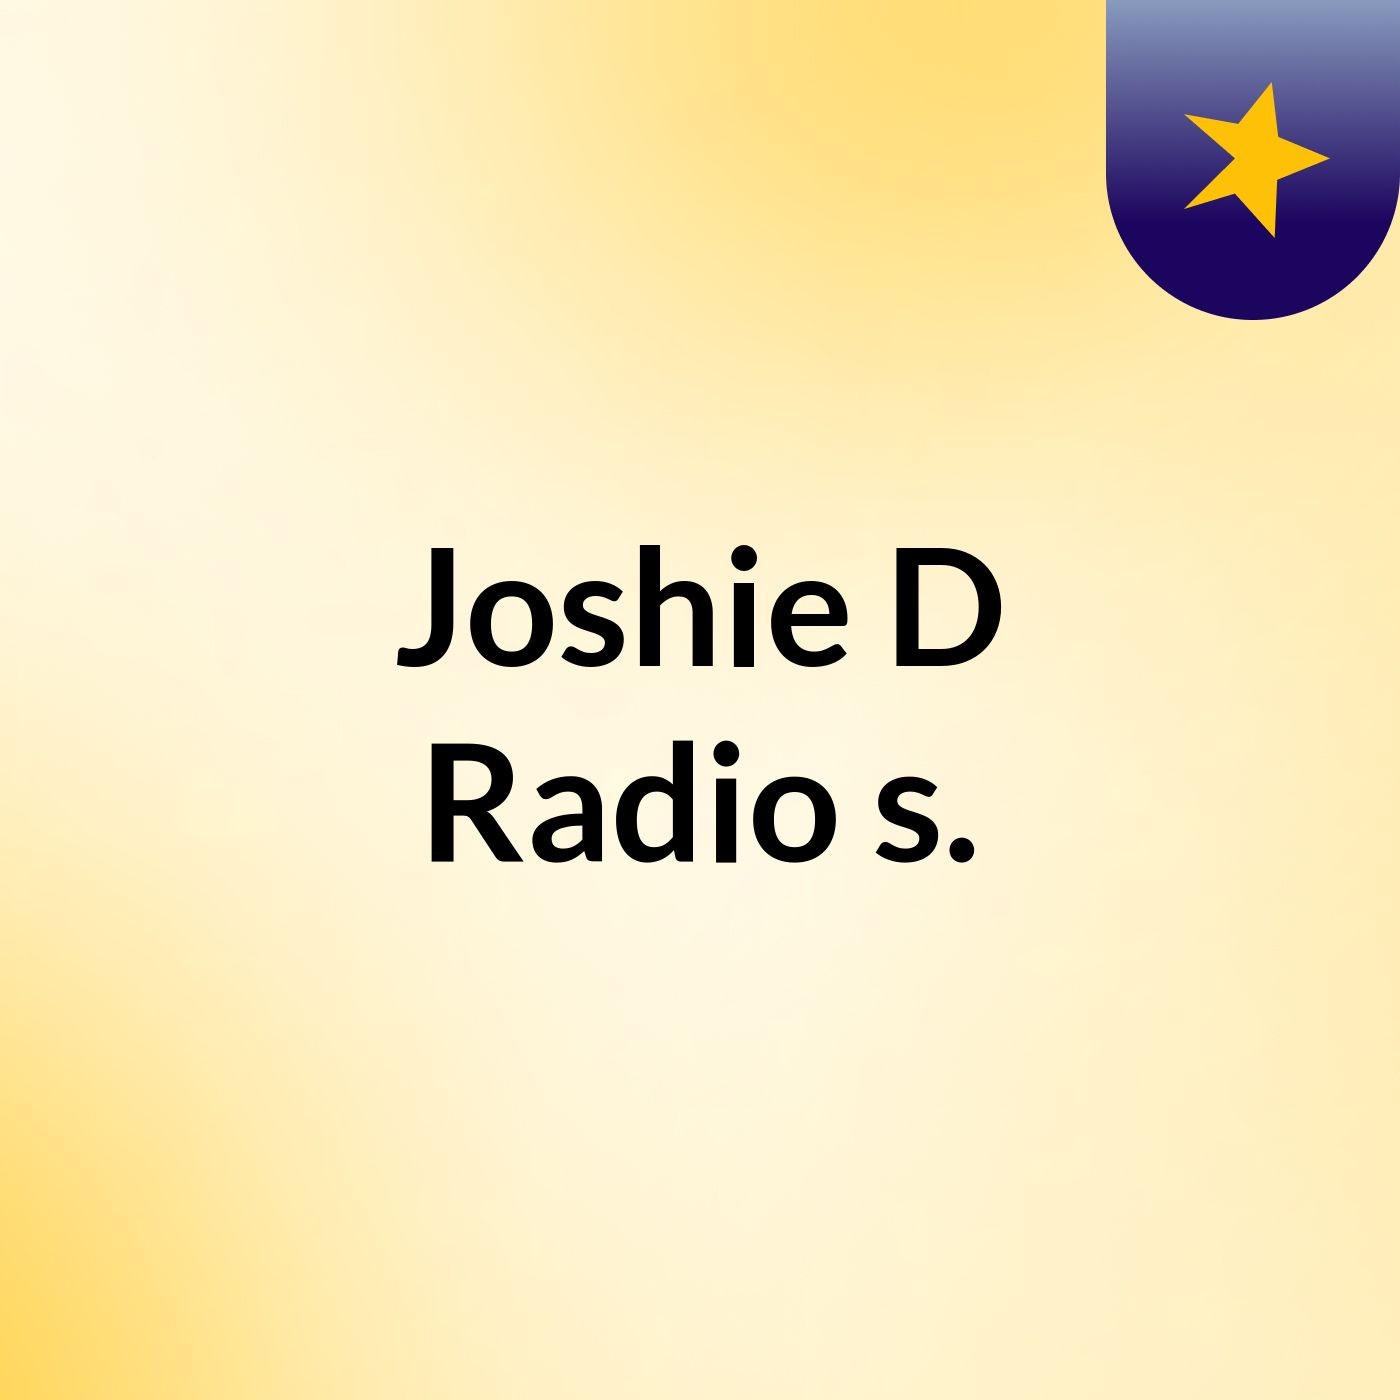 Joshie D Radio's.